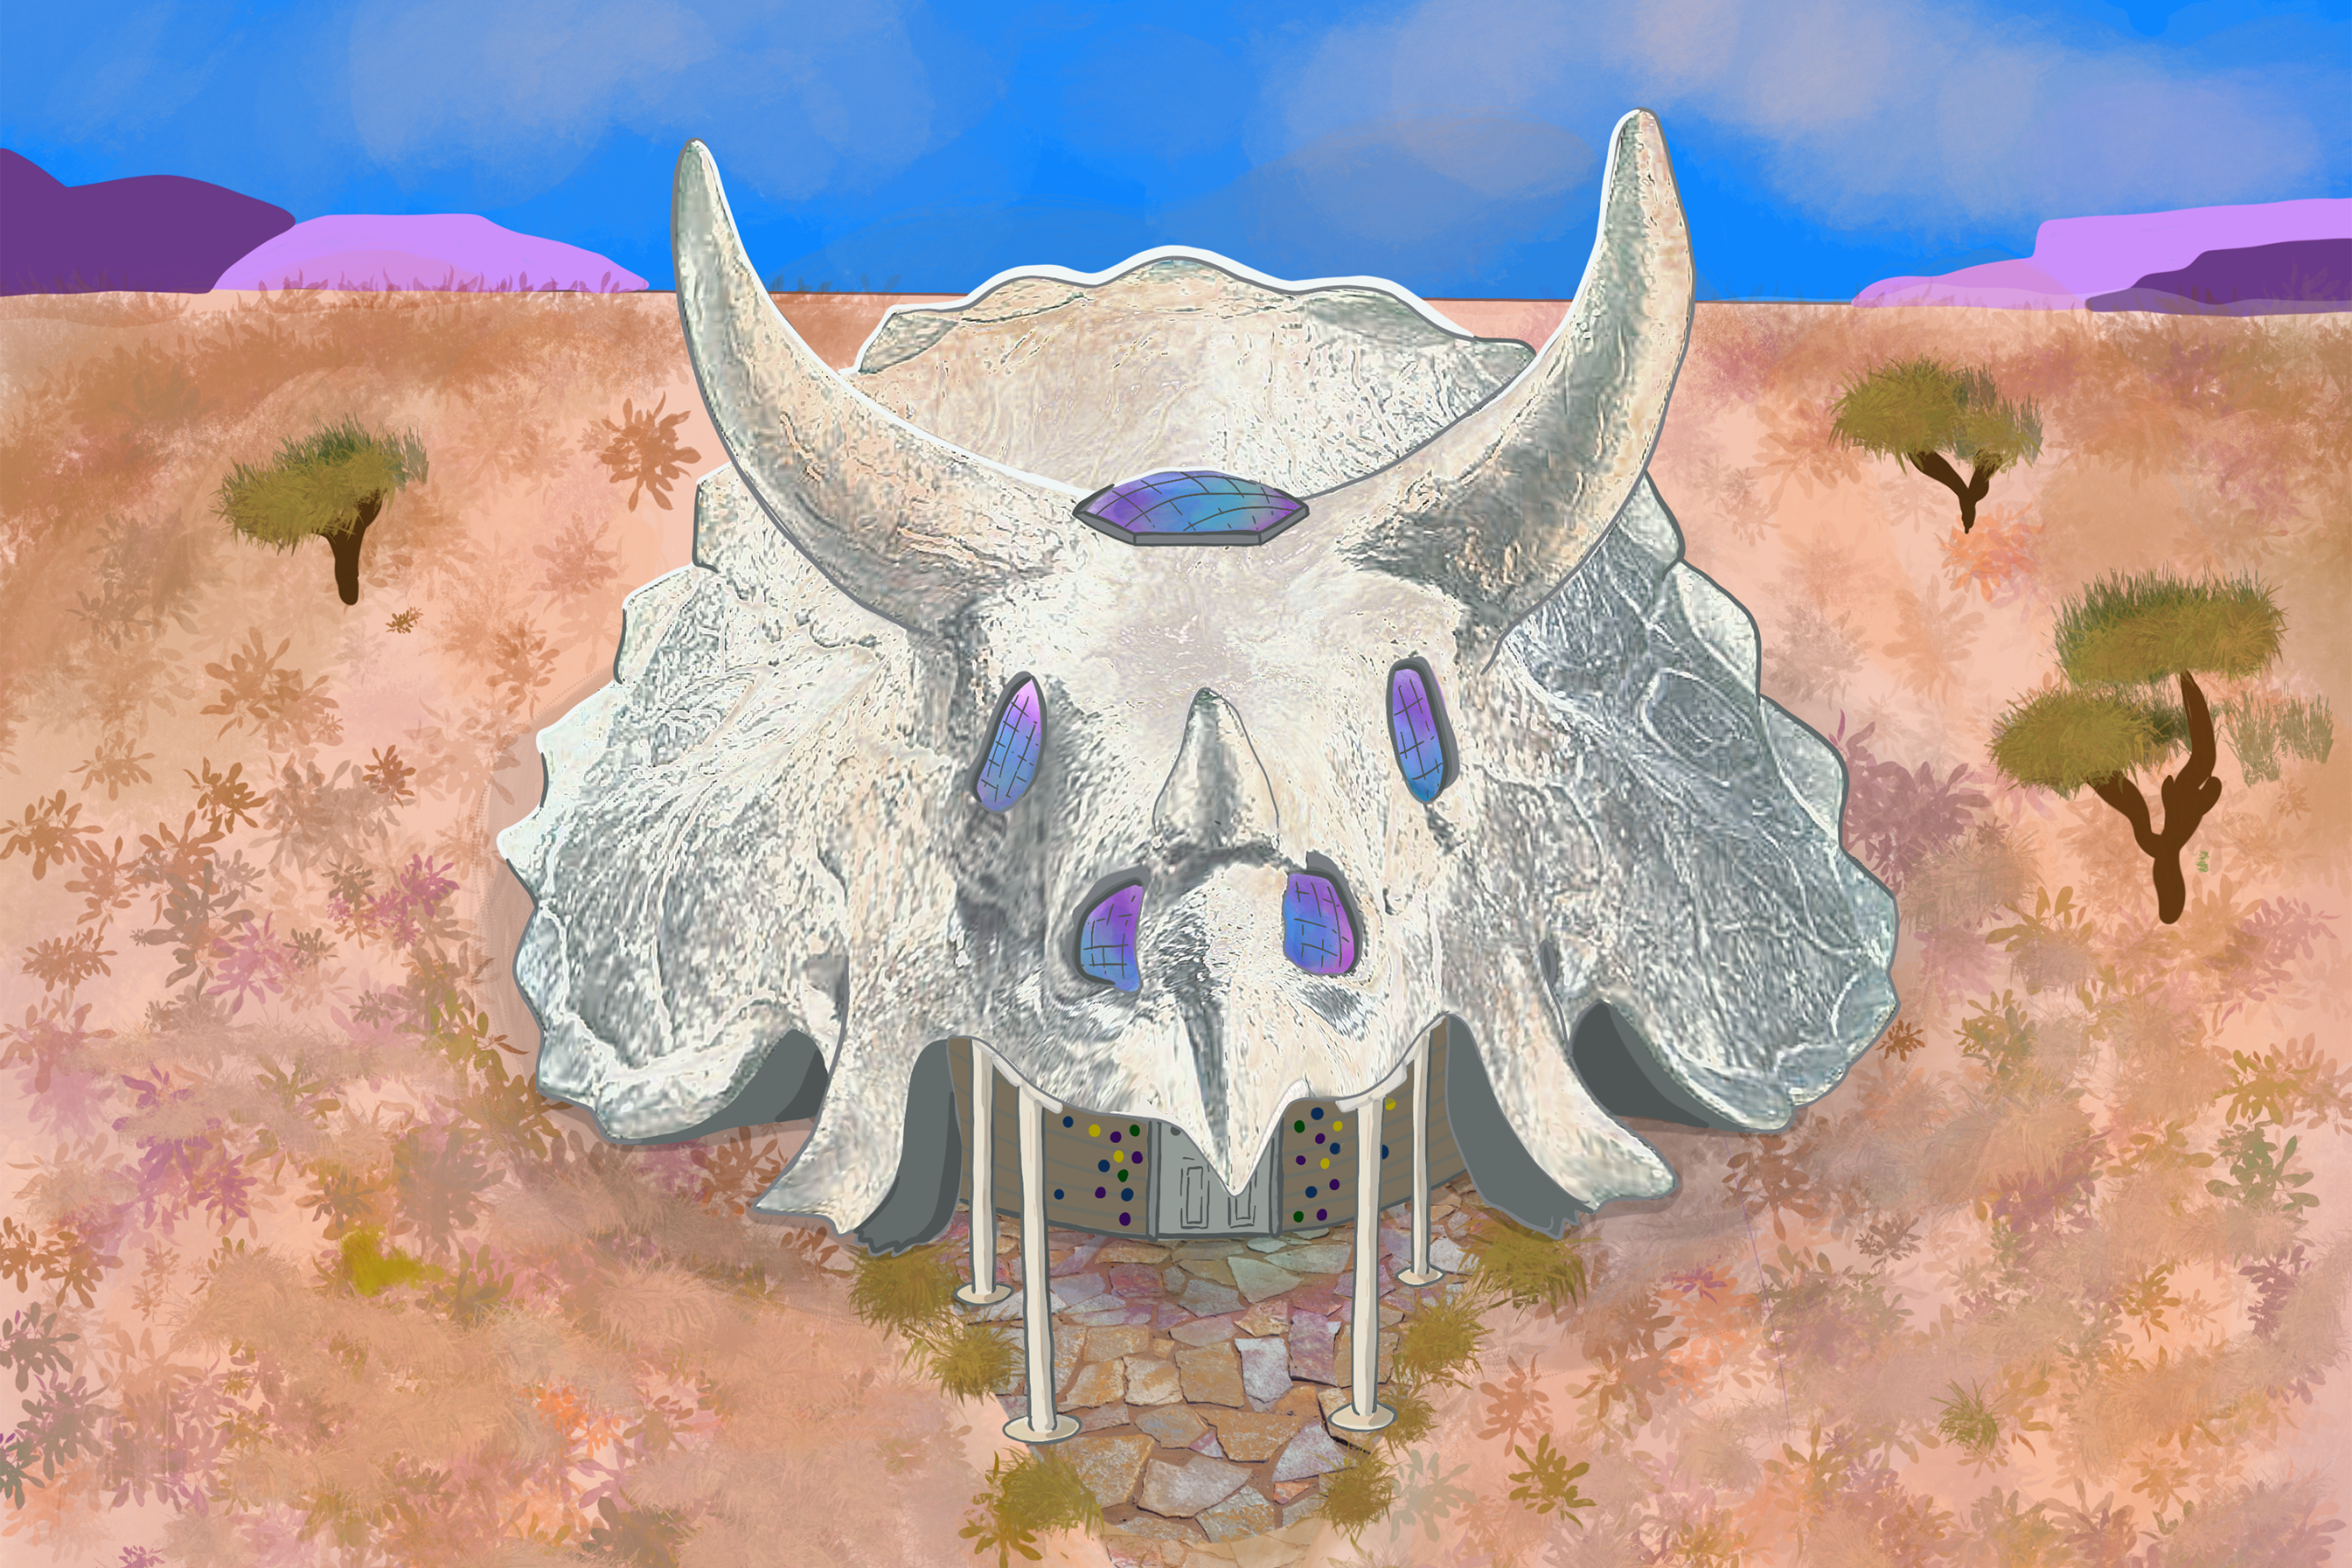 Desert home in the shape of a triceratops skull